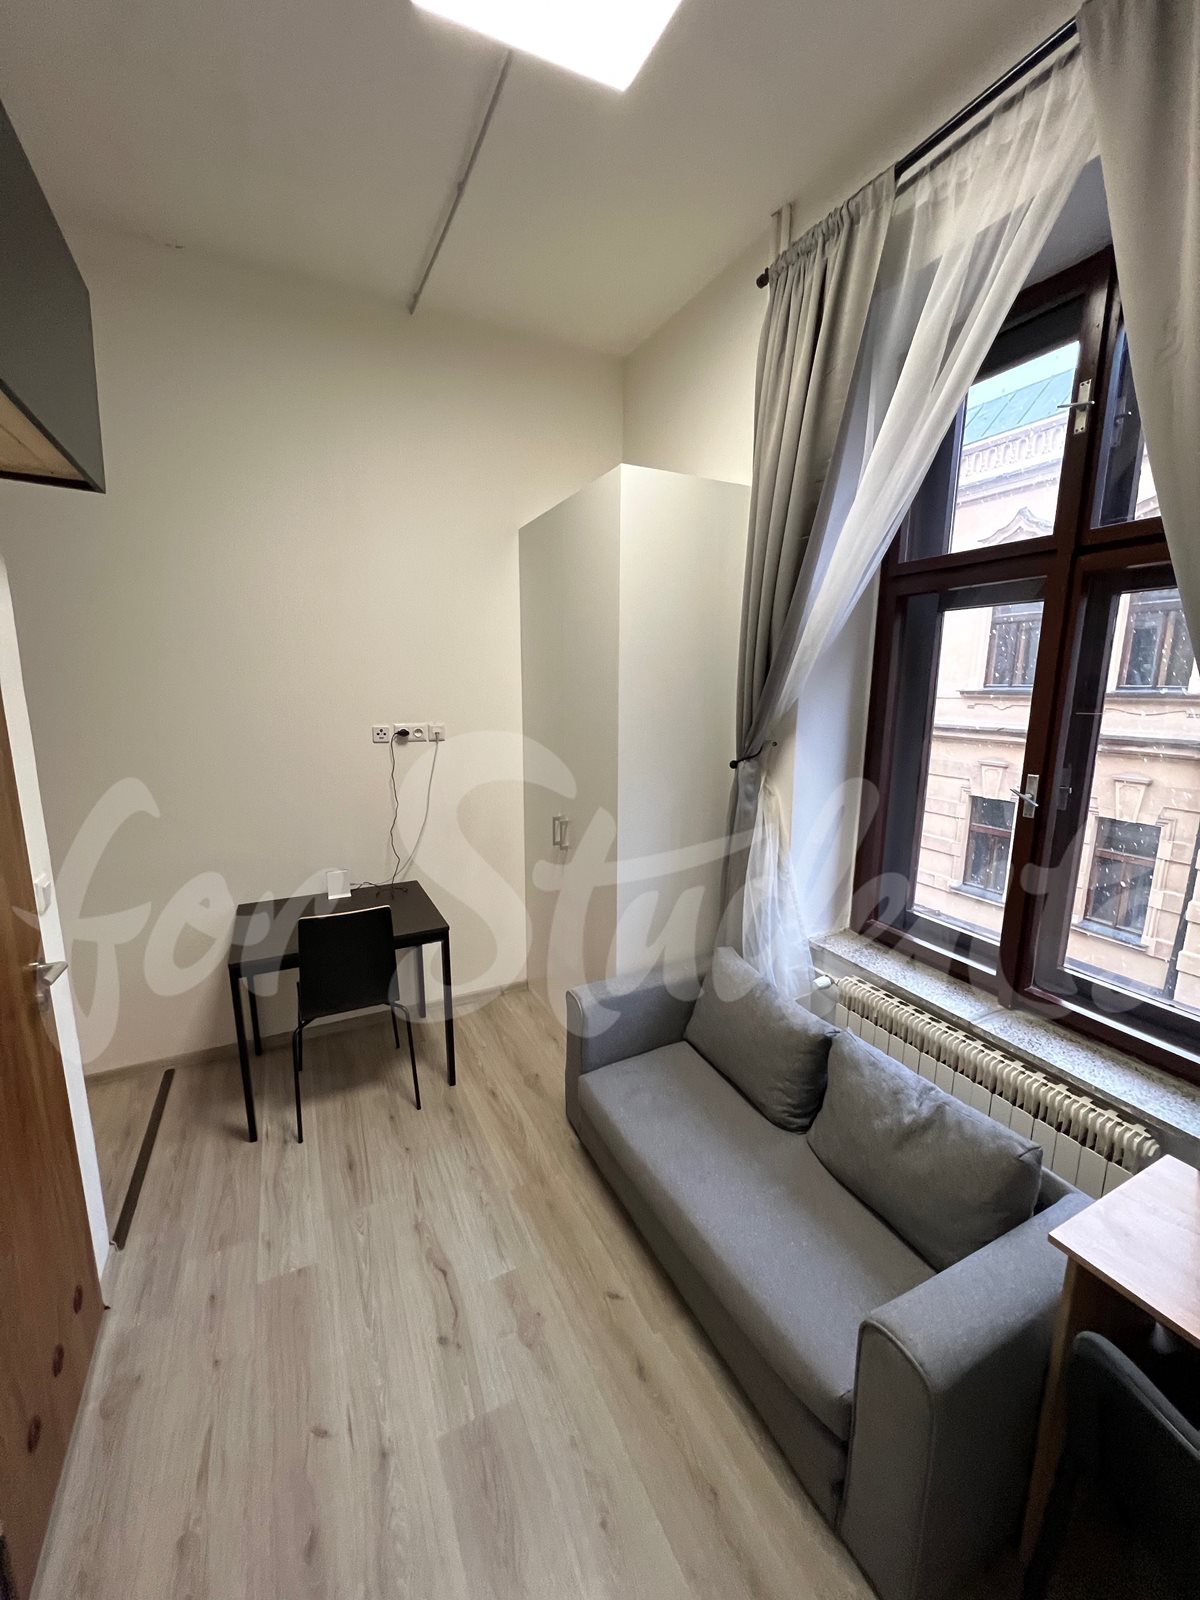 Newly bright reconstructed studio apartment in city centre, Hradec Králové